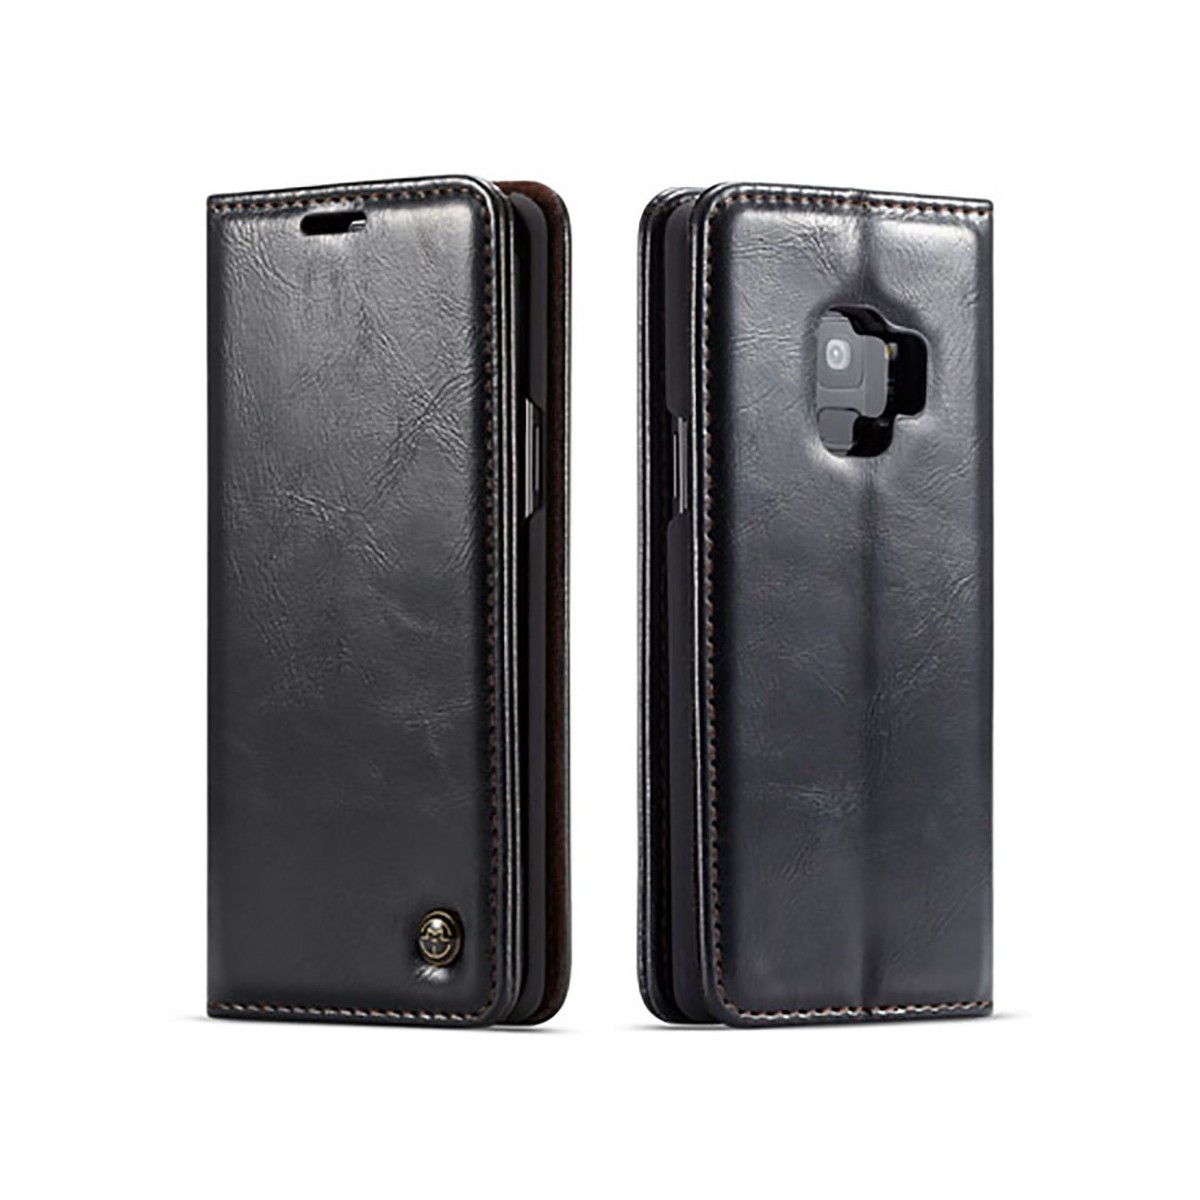 Etui Galaxy S9 porte-cartes noir - CaseMe